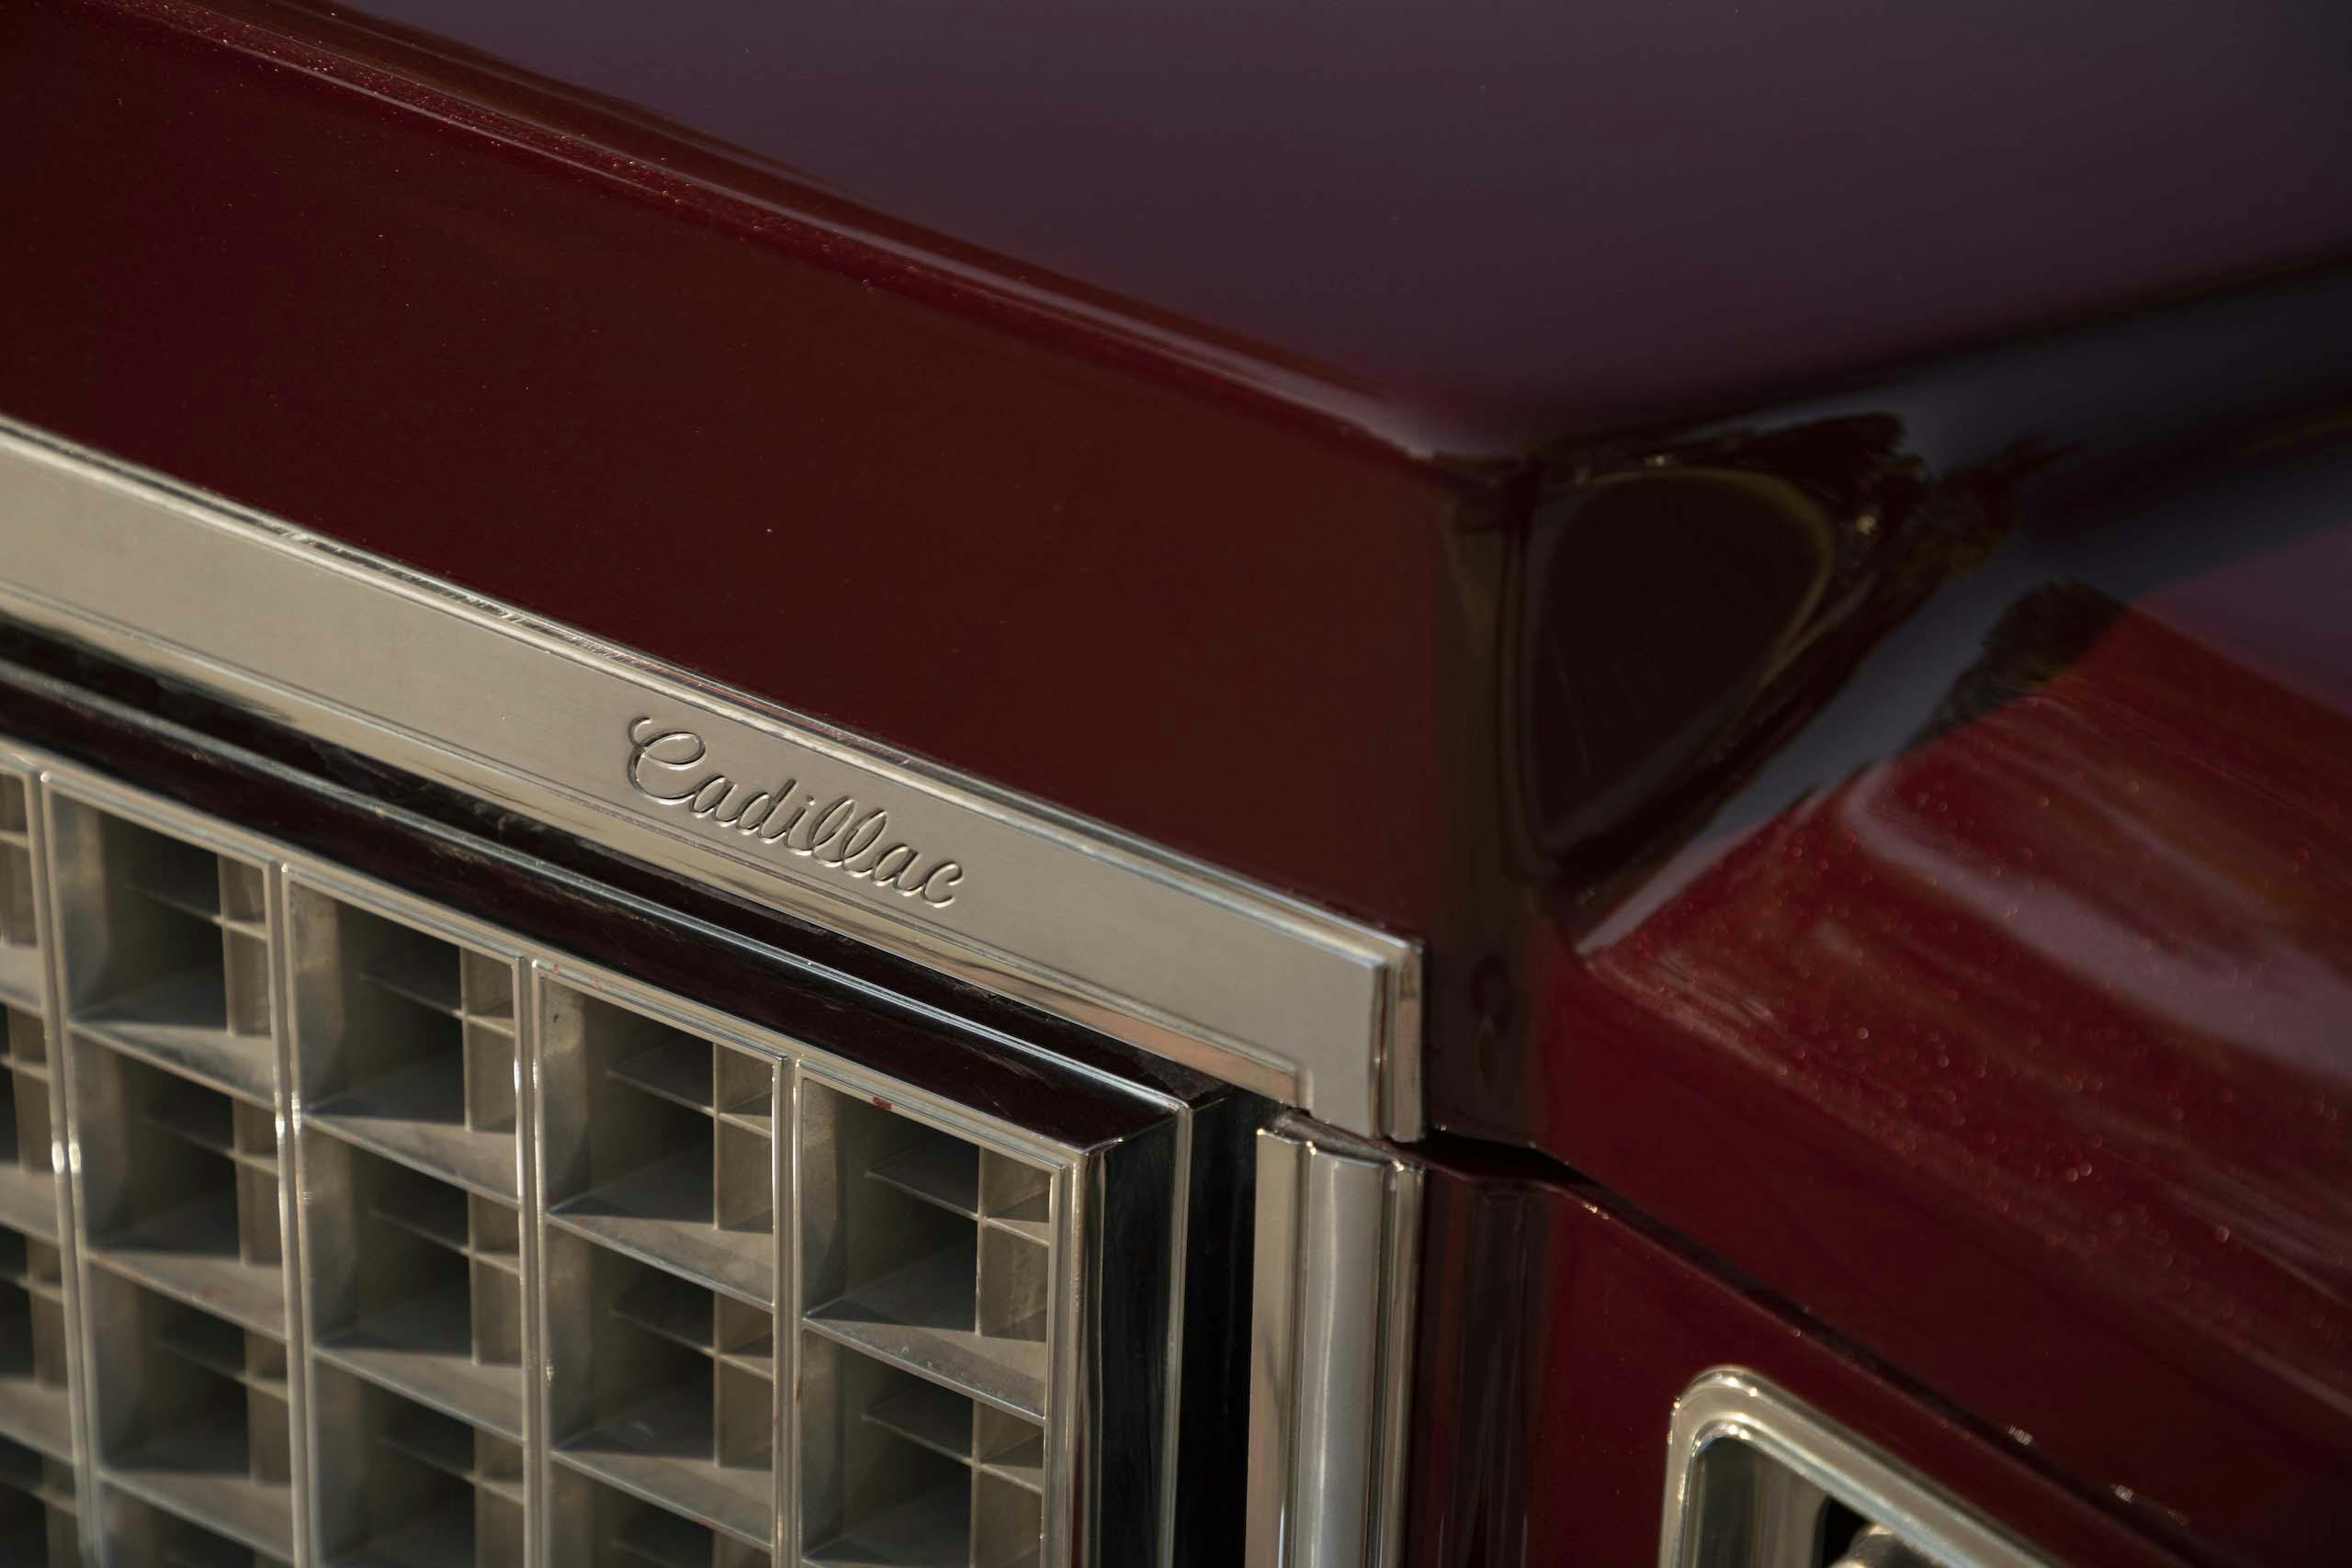 1976 Cadillac Coupe DeVille front grille detail